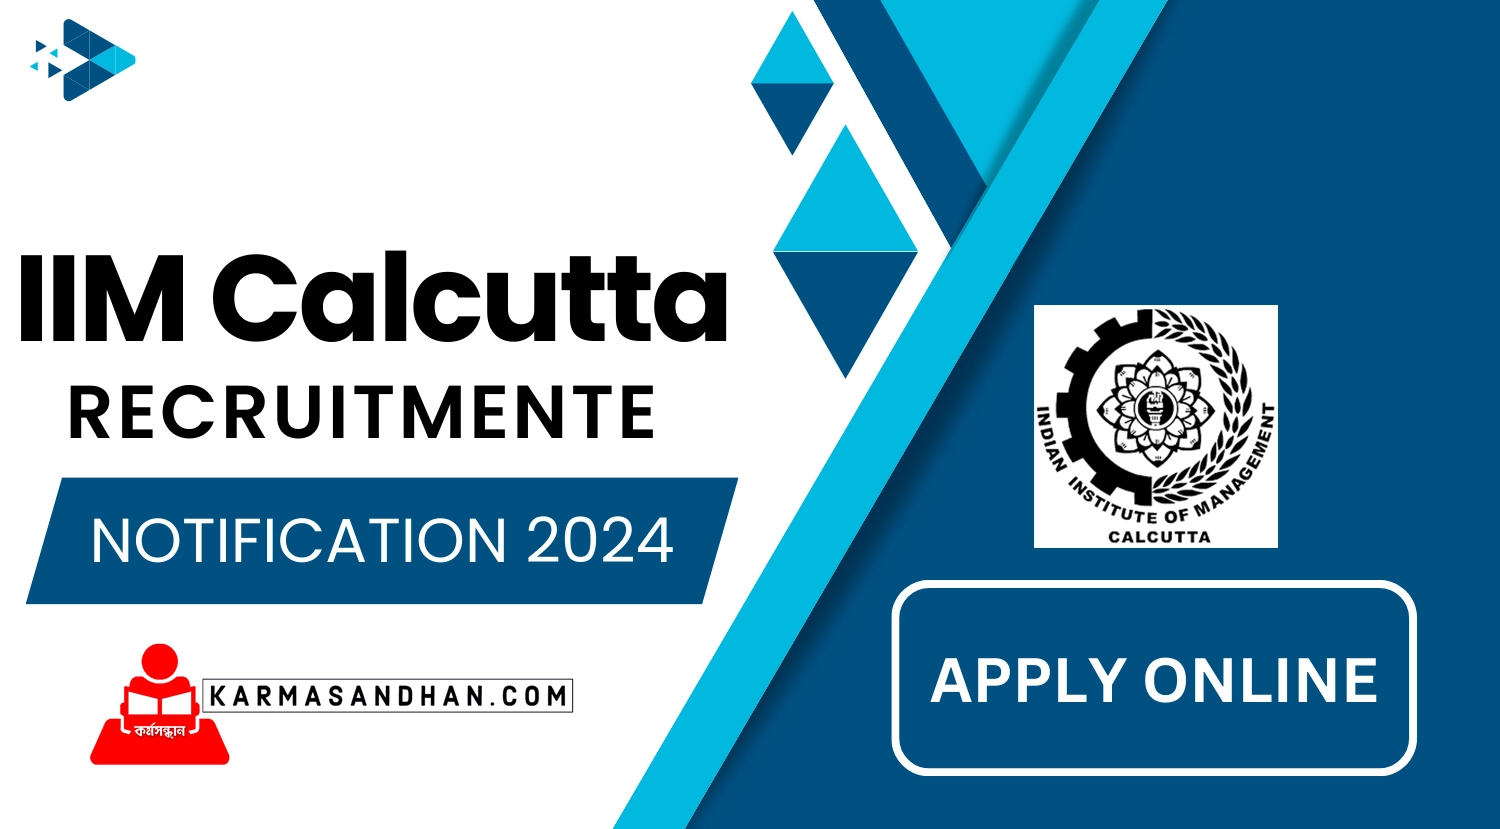 IIM Calcutta Manager Recruitment 2024